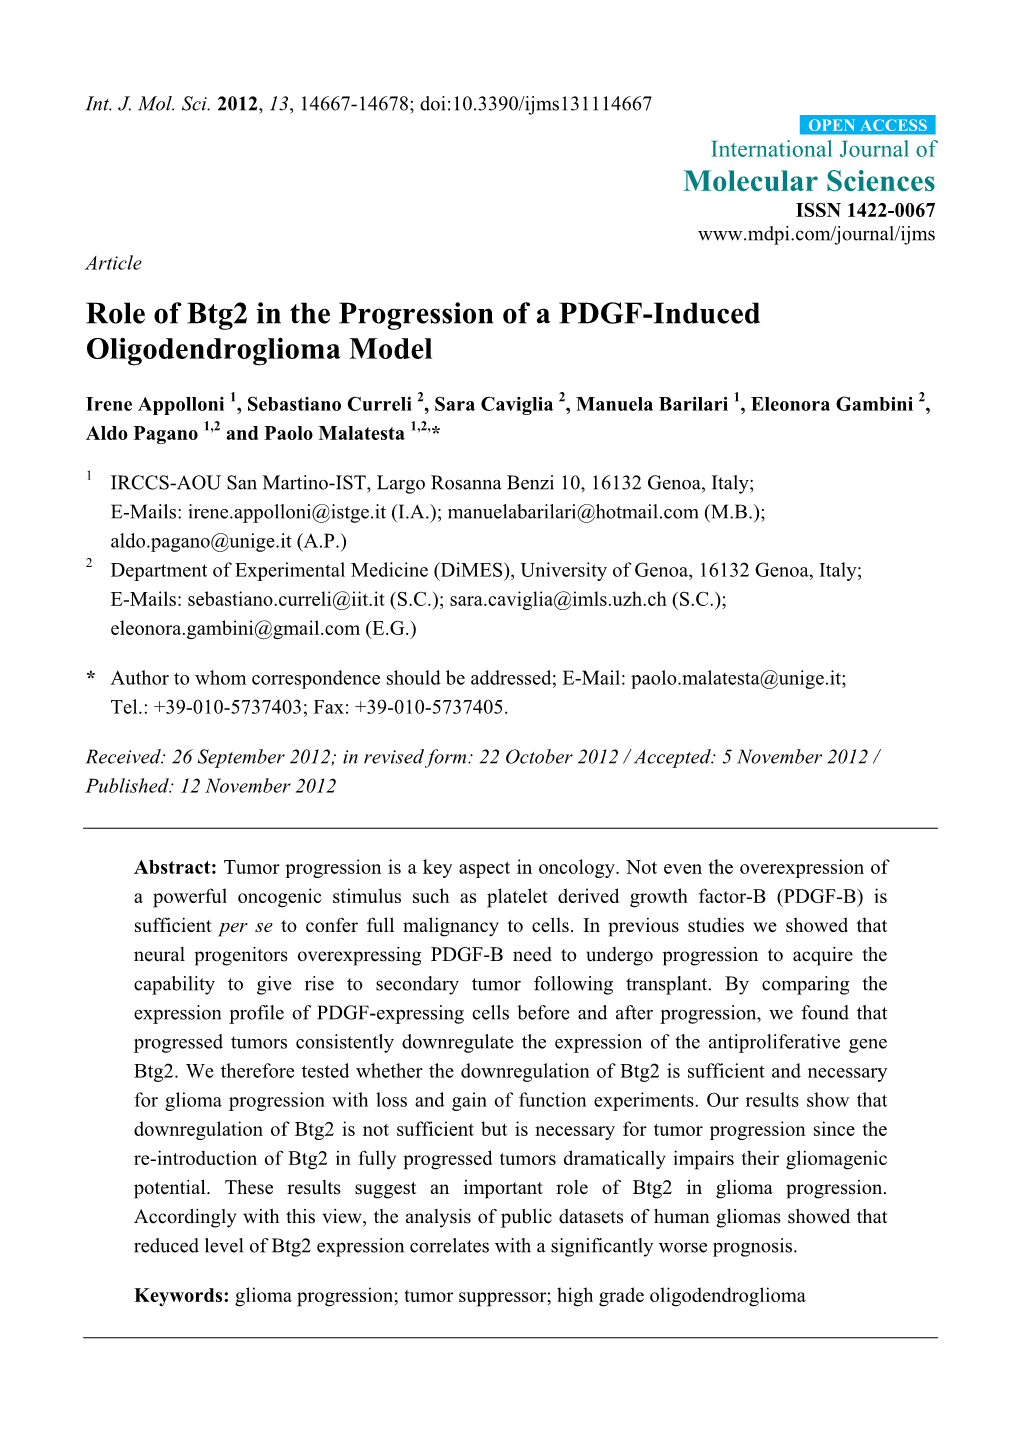 Role of Btg2 in the Progression of a PDGF-Induced Oligodendroglioma Model